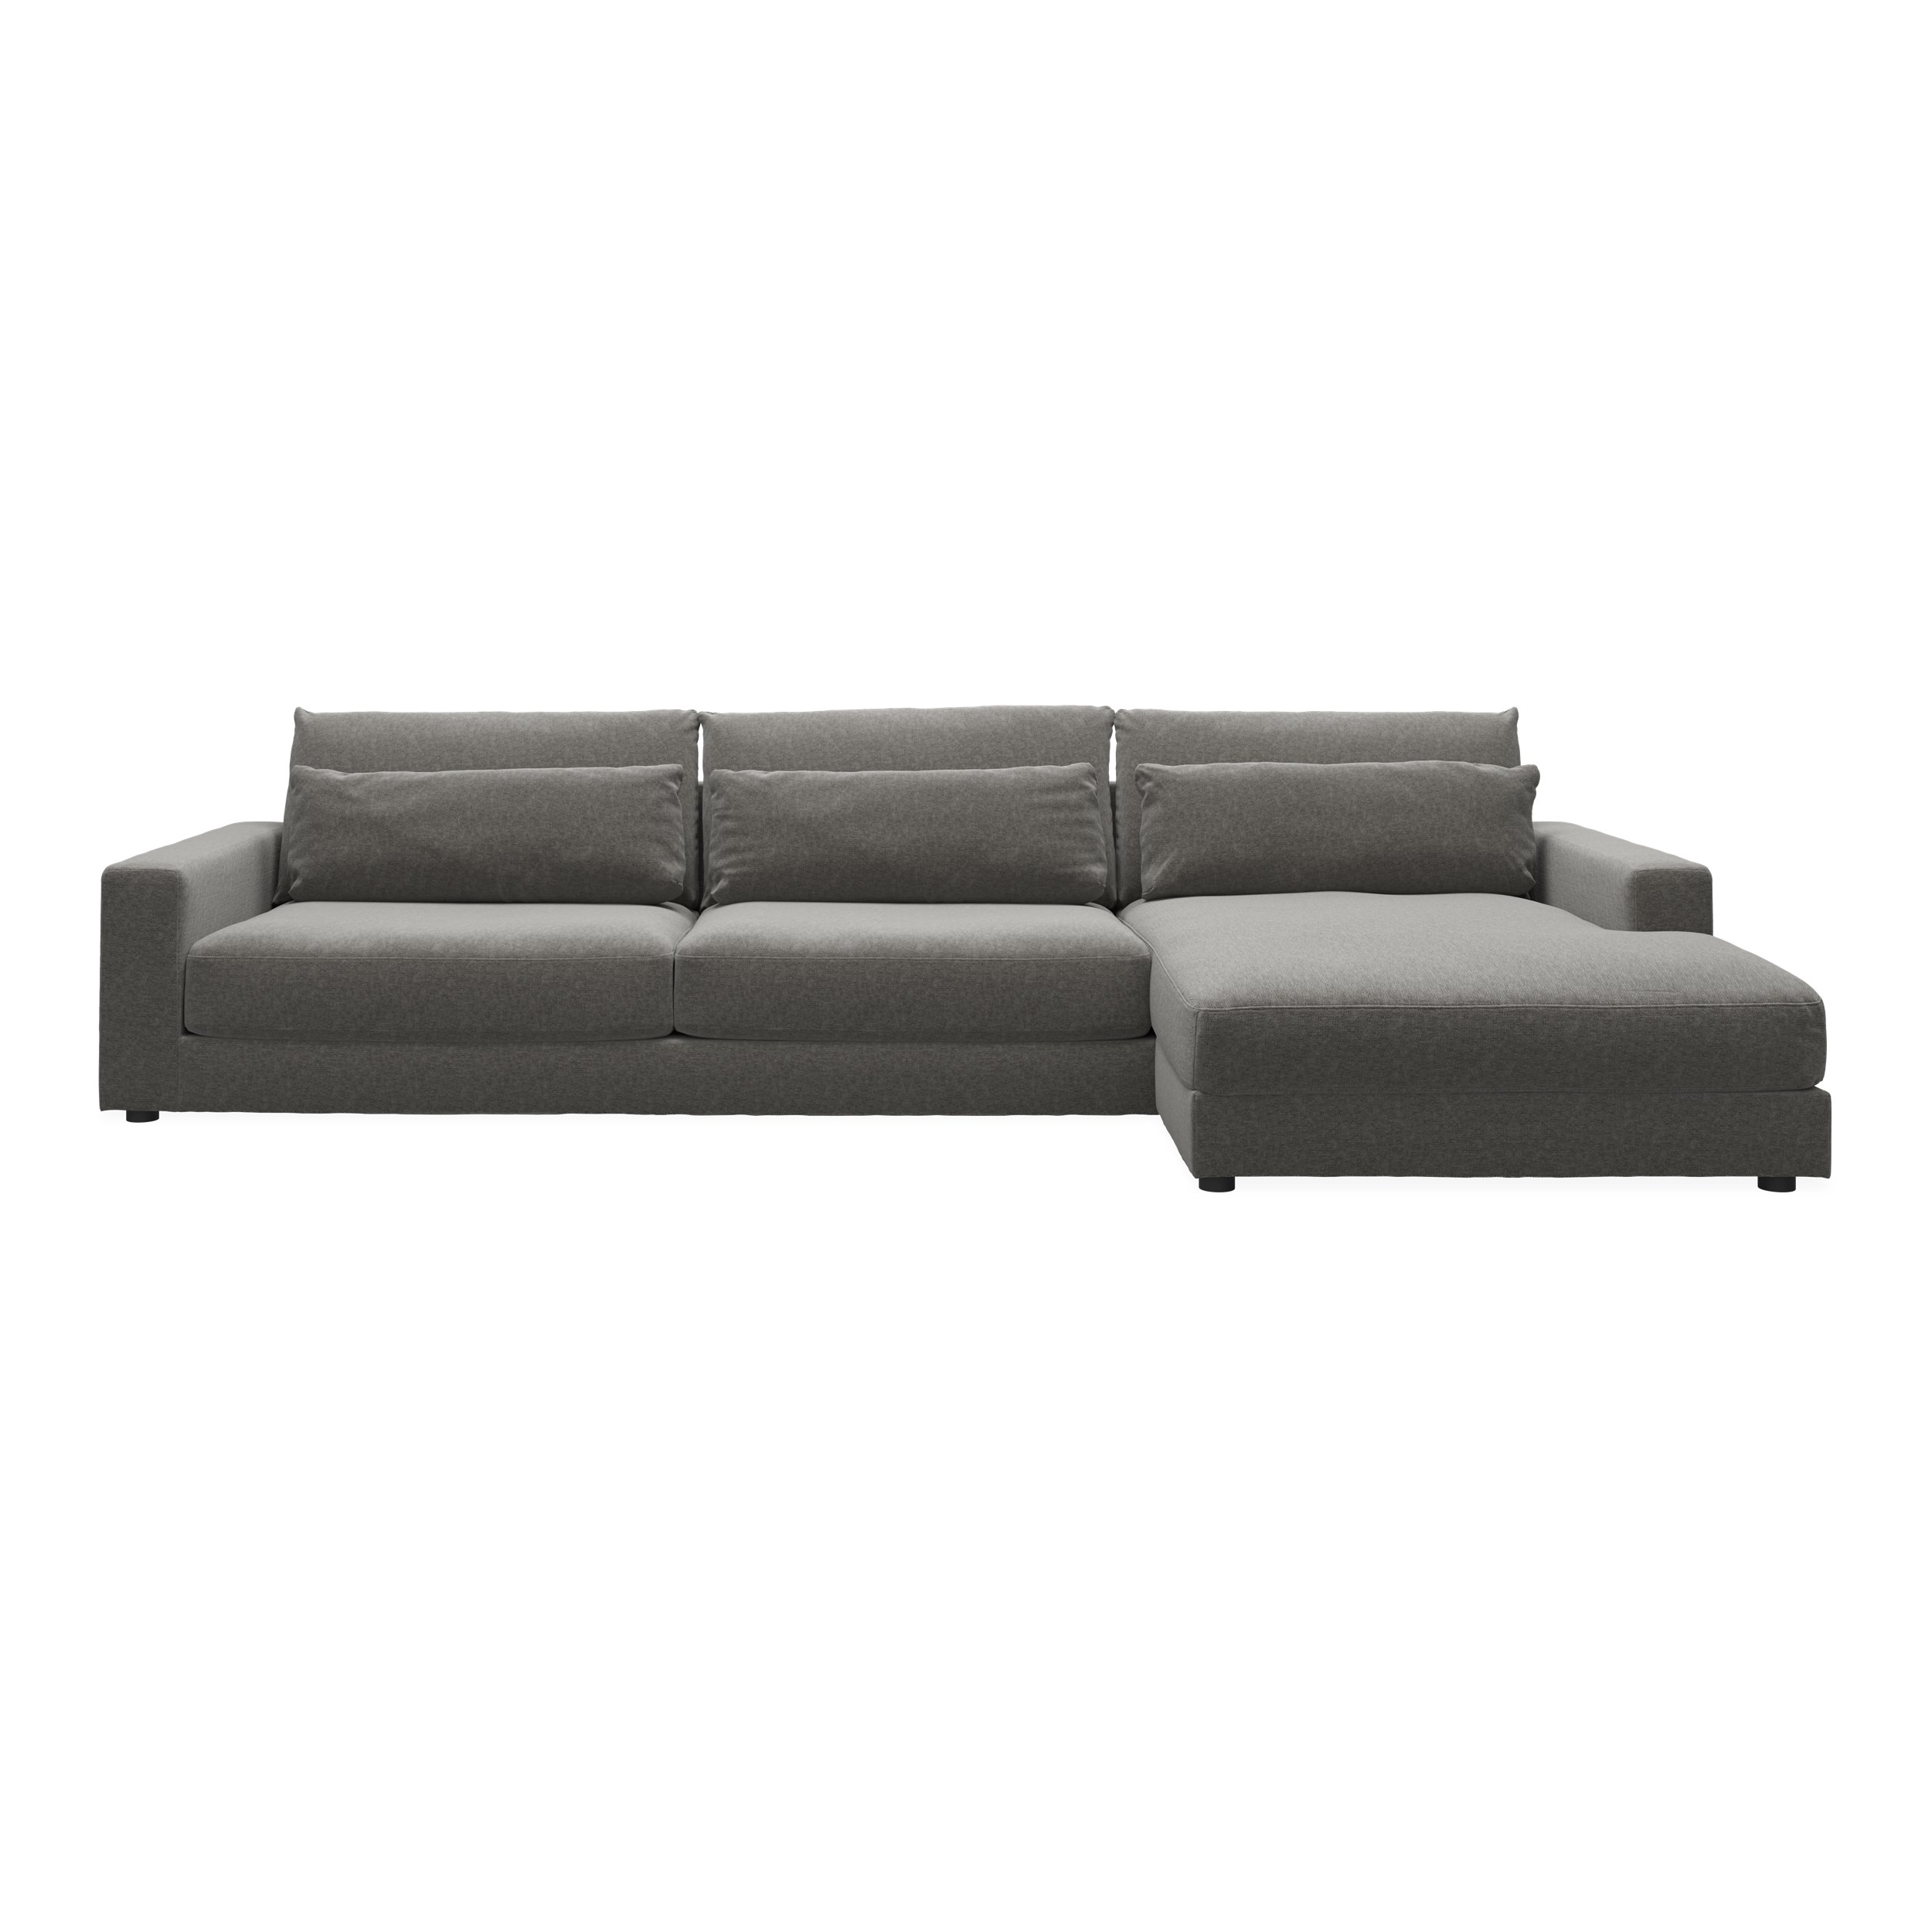 Halmstad Sofa med chaiselong - Danny 18 Grey stof og ben i sort plast